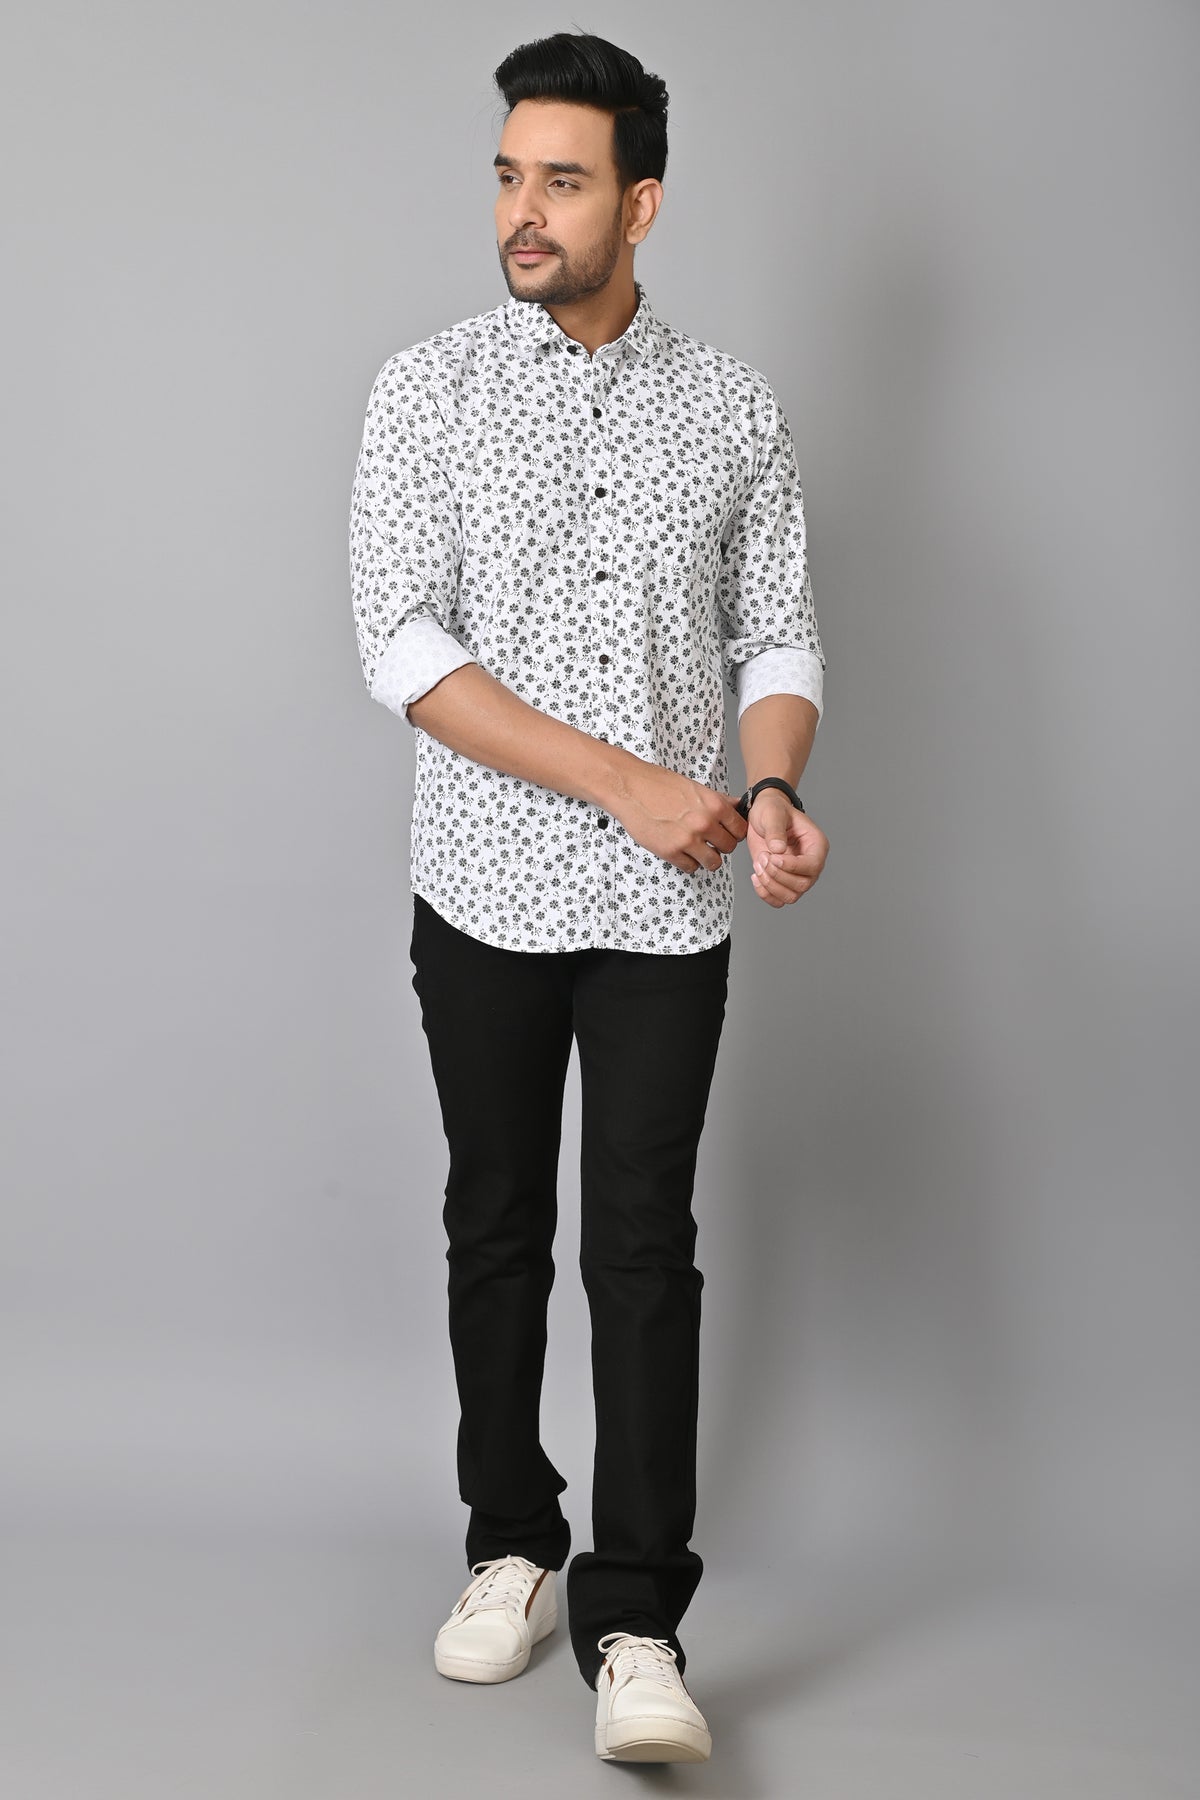 Jaguro Men's Printed Casual Shirt WHITE